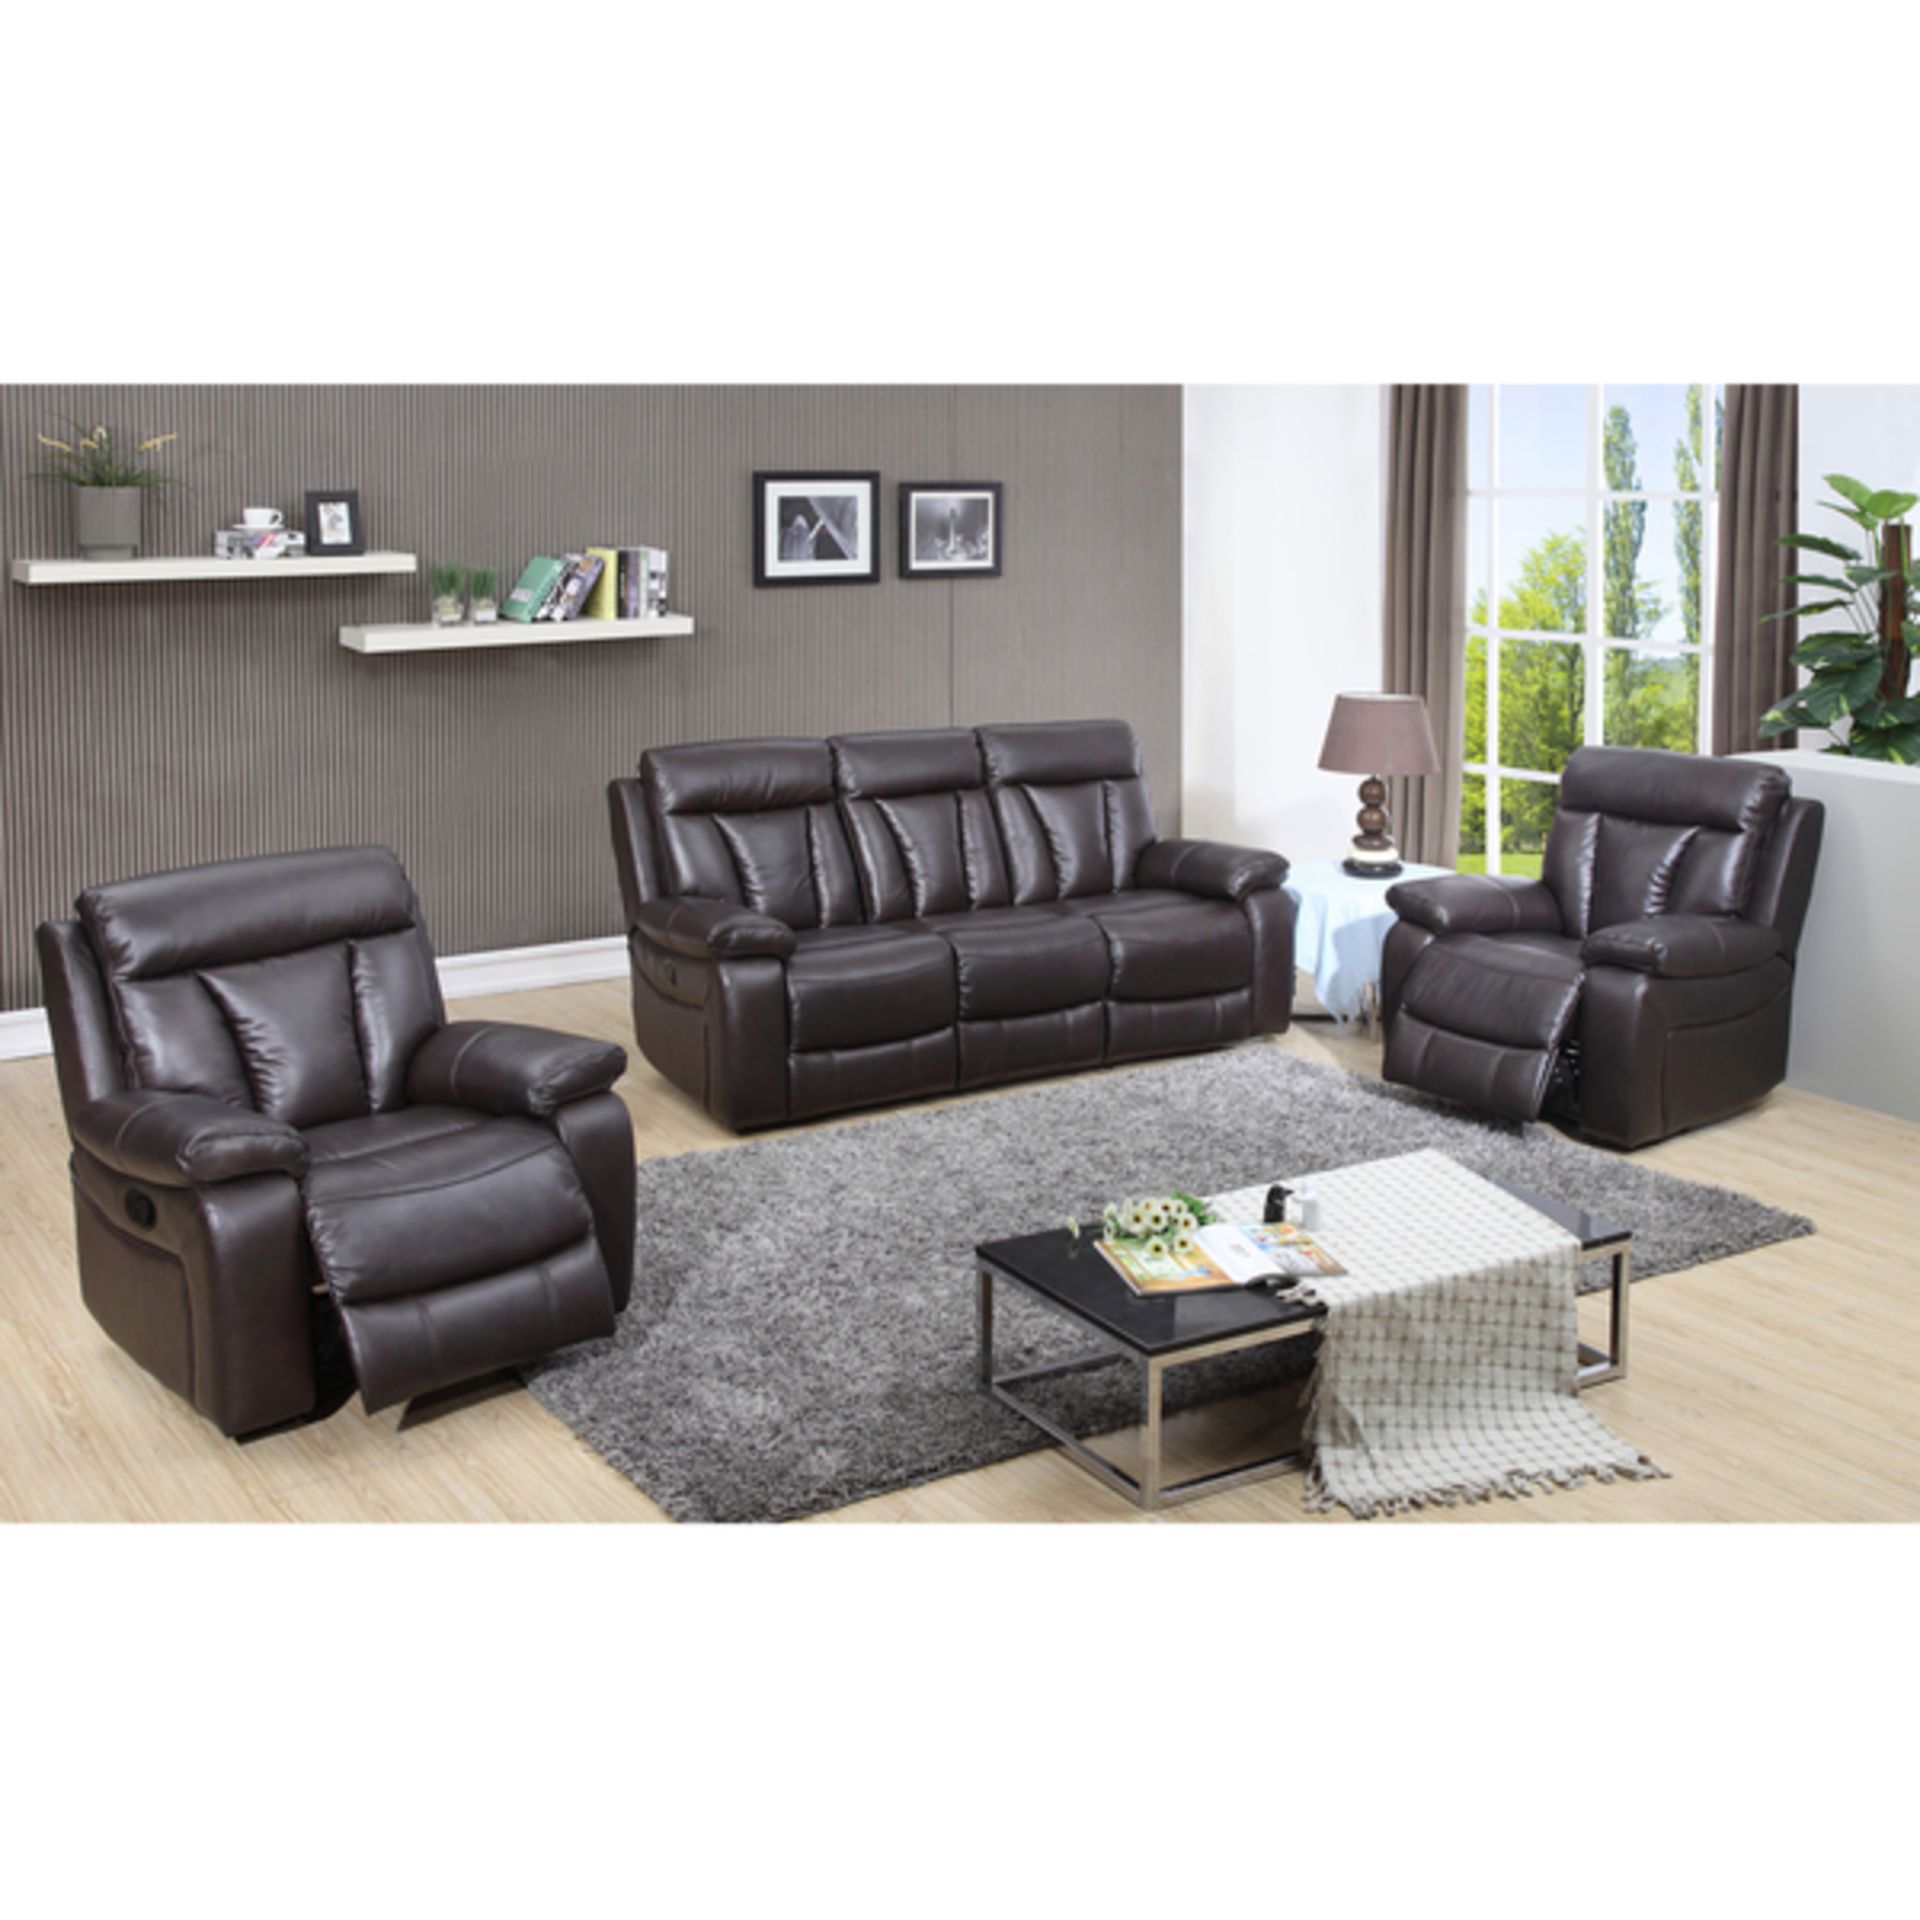 Brand new direct from the manufacturers Bermuda 3 seater laredo reclining sofa plus 2 laredo